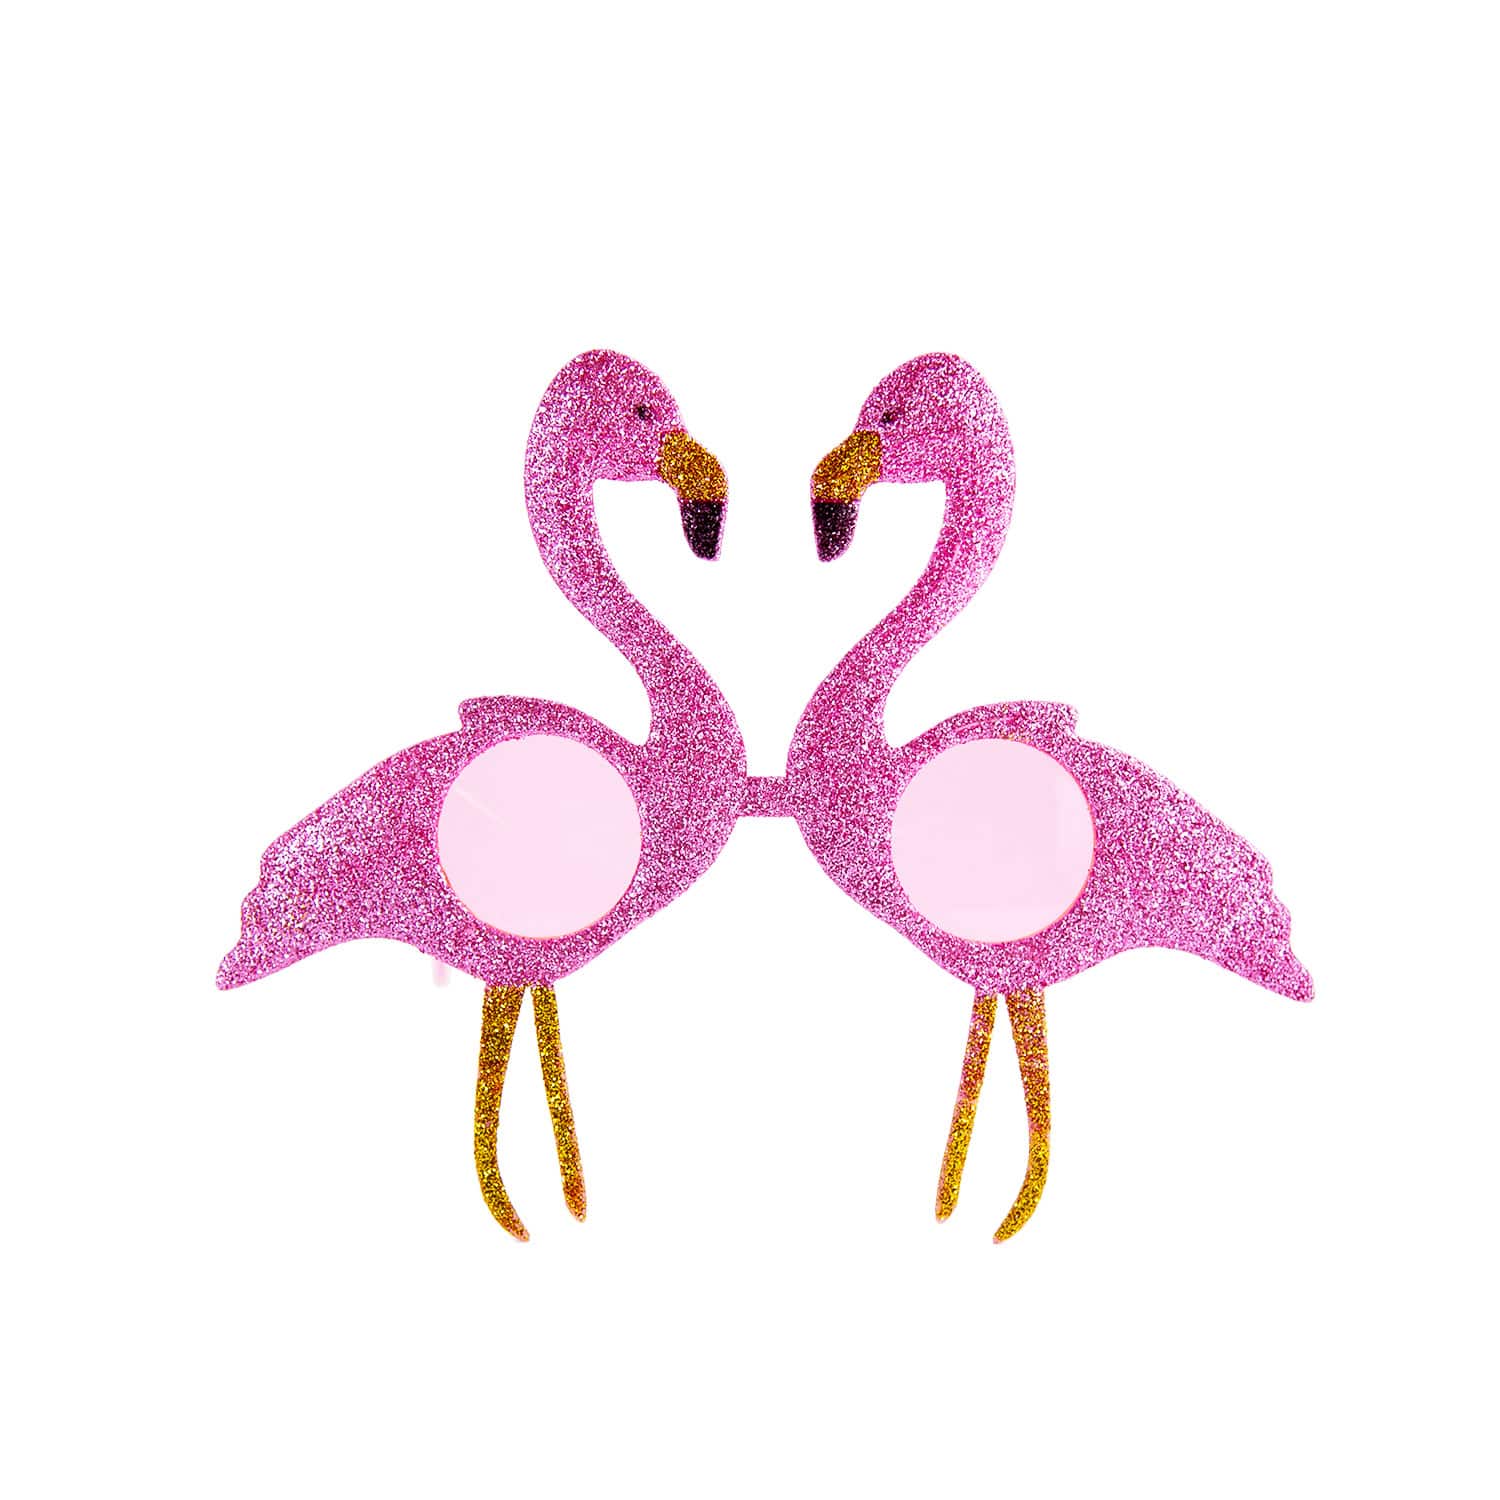 Flamingo Brille Fur Jga Hawaii Sommer Party Accessoire Fasching Karneval Kinder Geburtstag